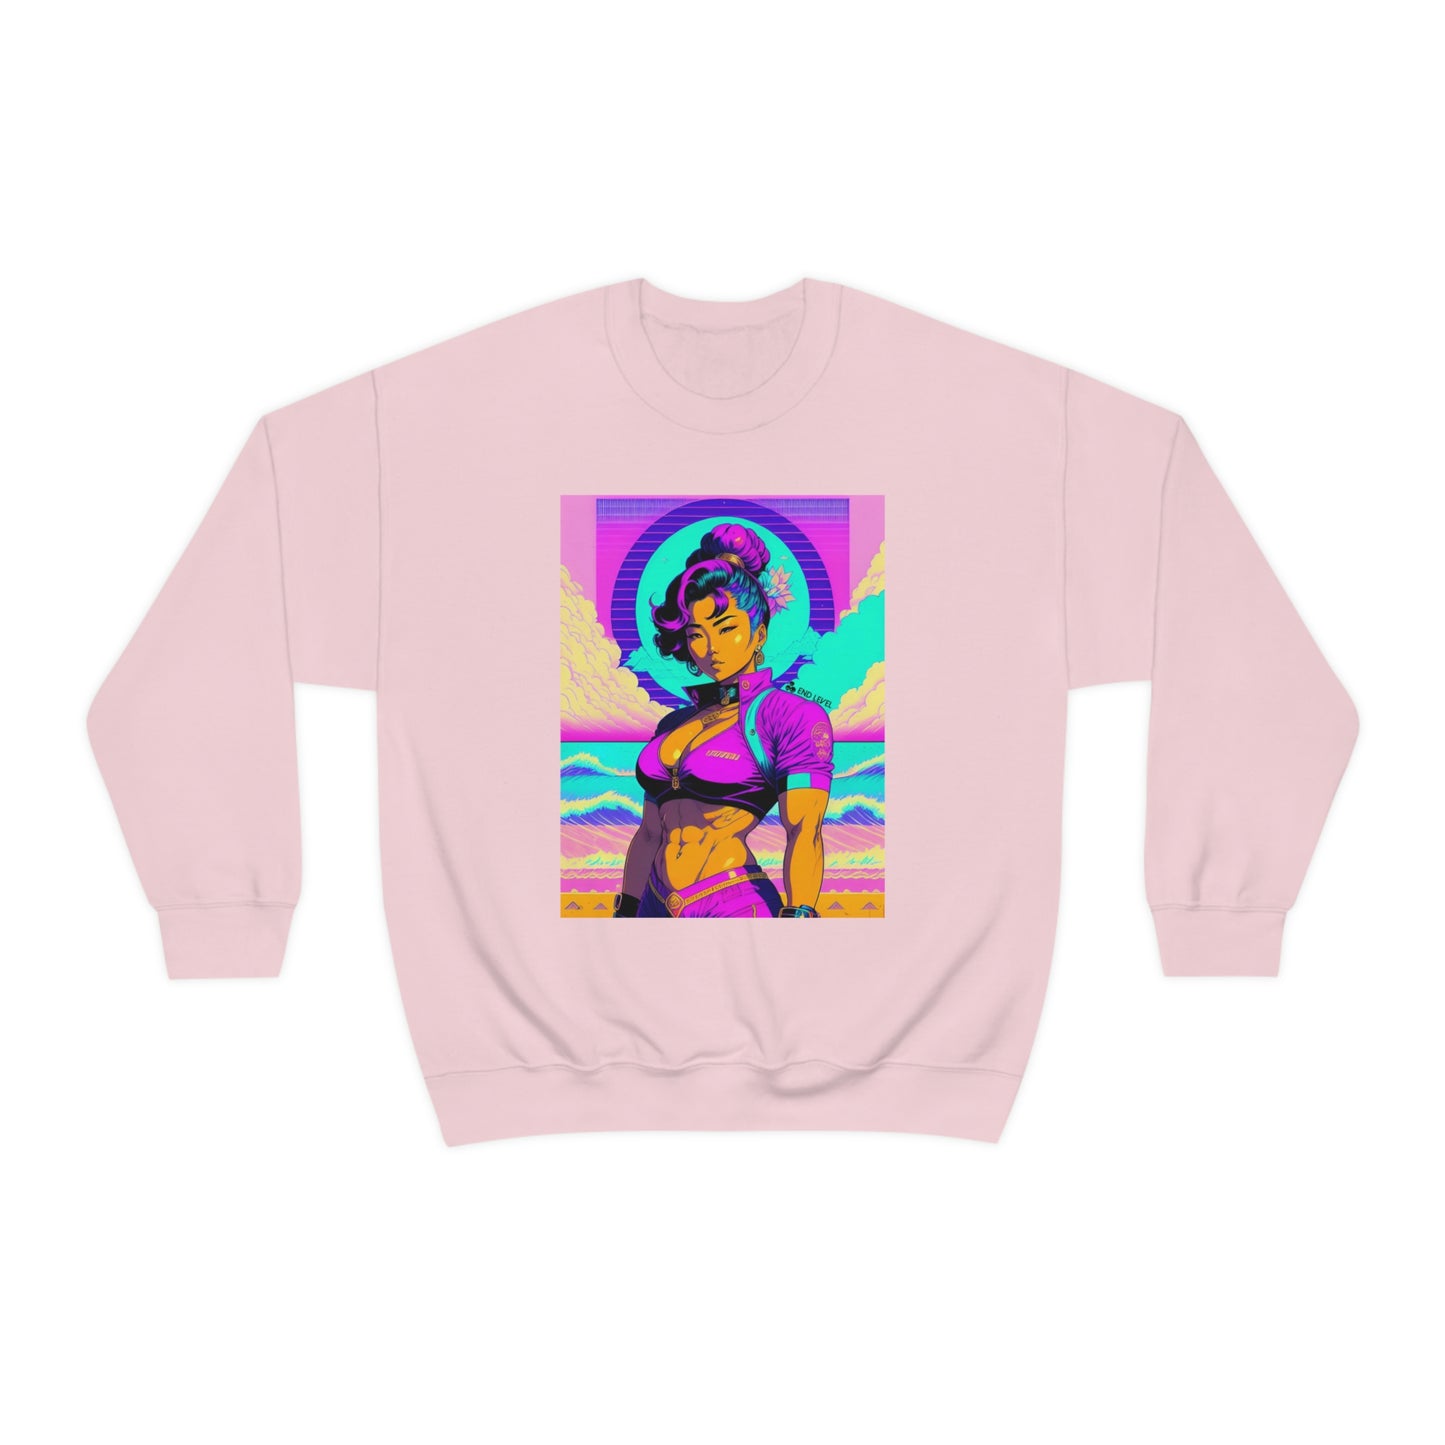 Pink sweatshirt with Lady Lotus design.